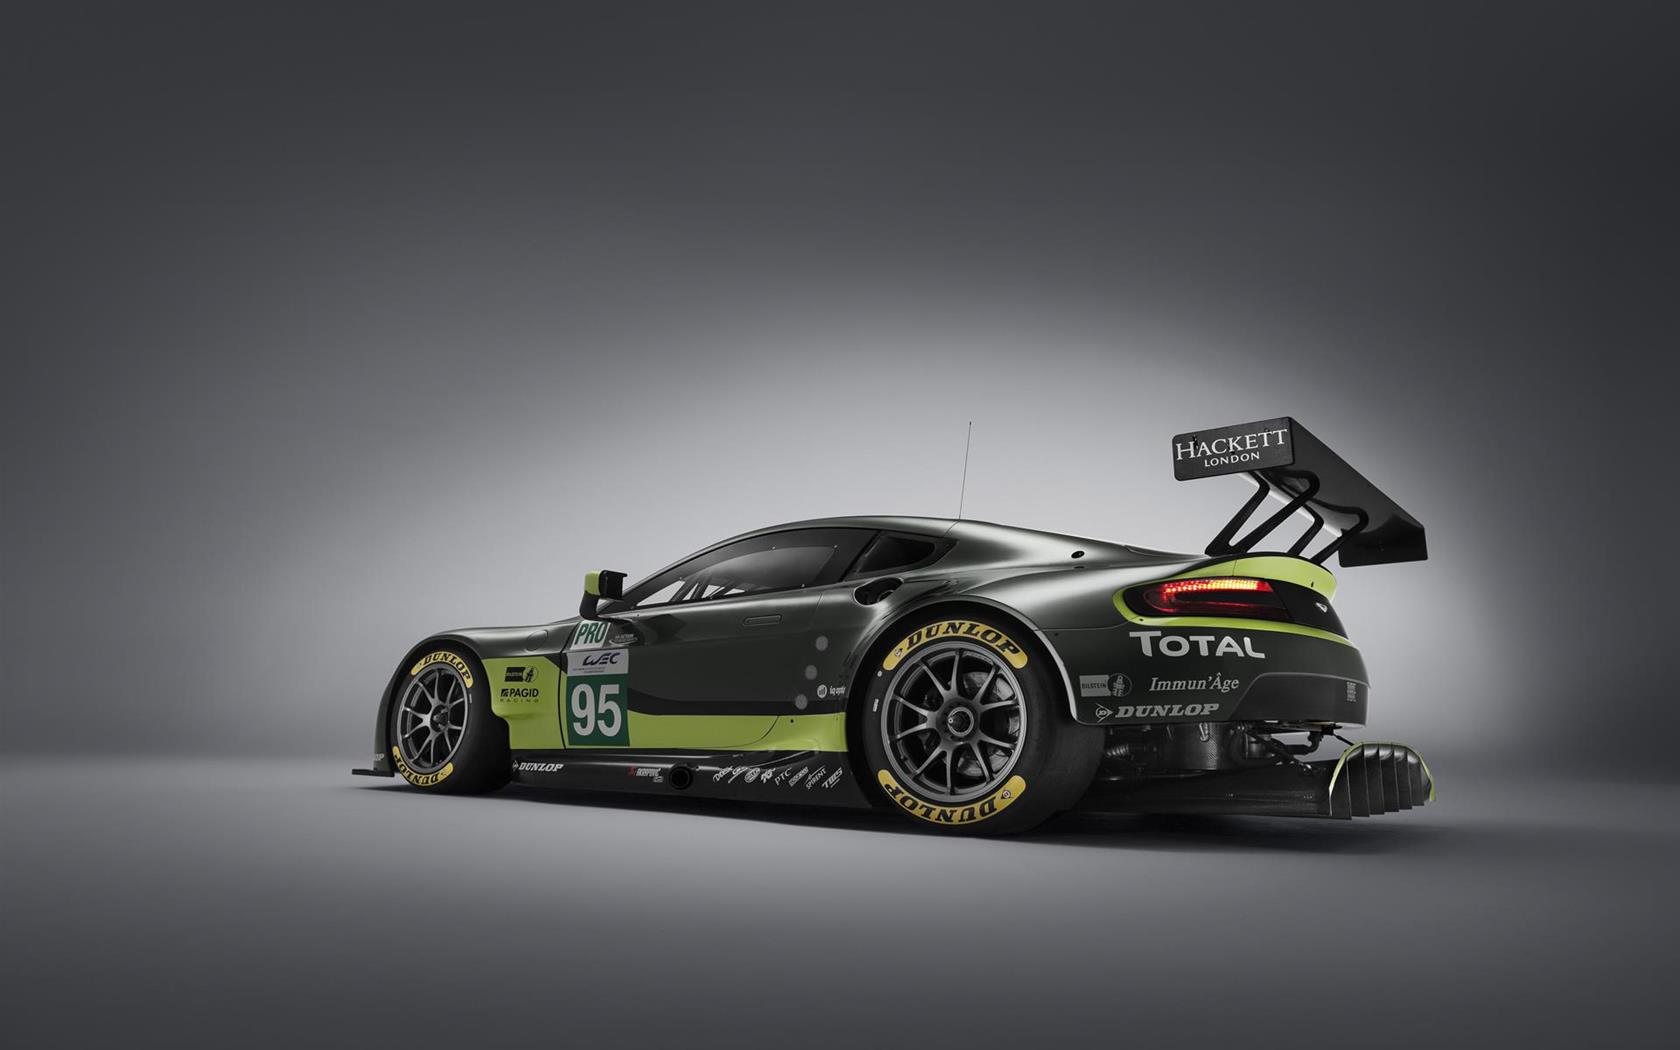 2014 Aston Martin V8 Vantage GTE